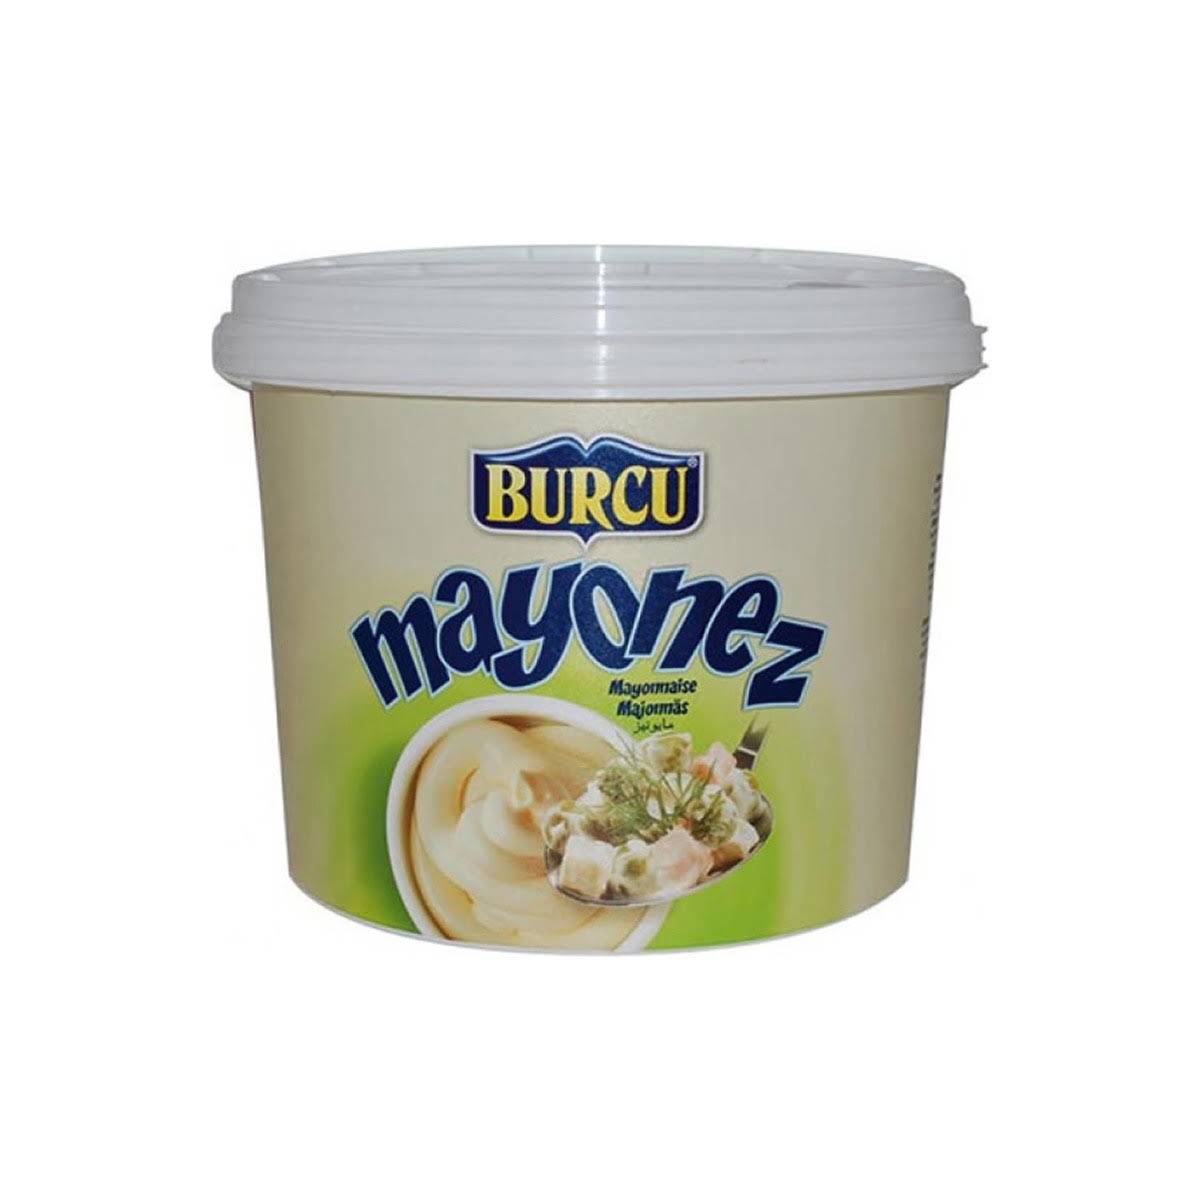 Mayonez poşetli ambalaj servis için 8000 gramlık kova kolide 2 adet Burcu marka